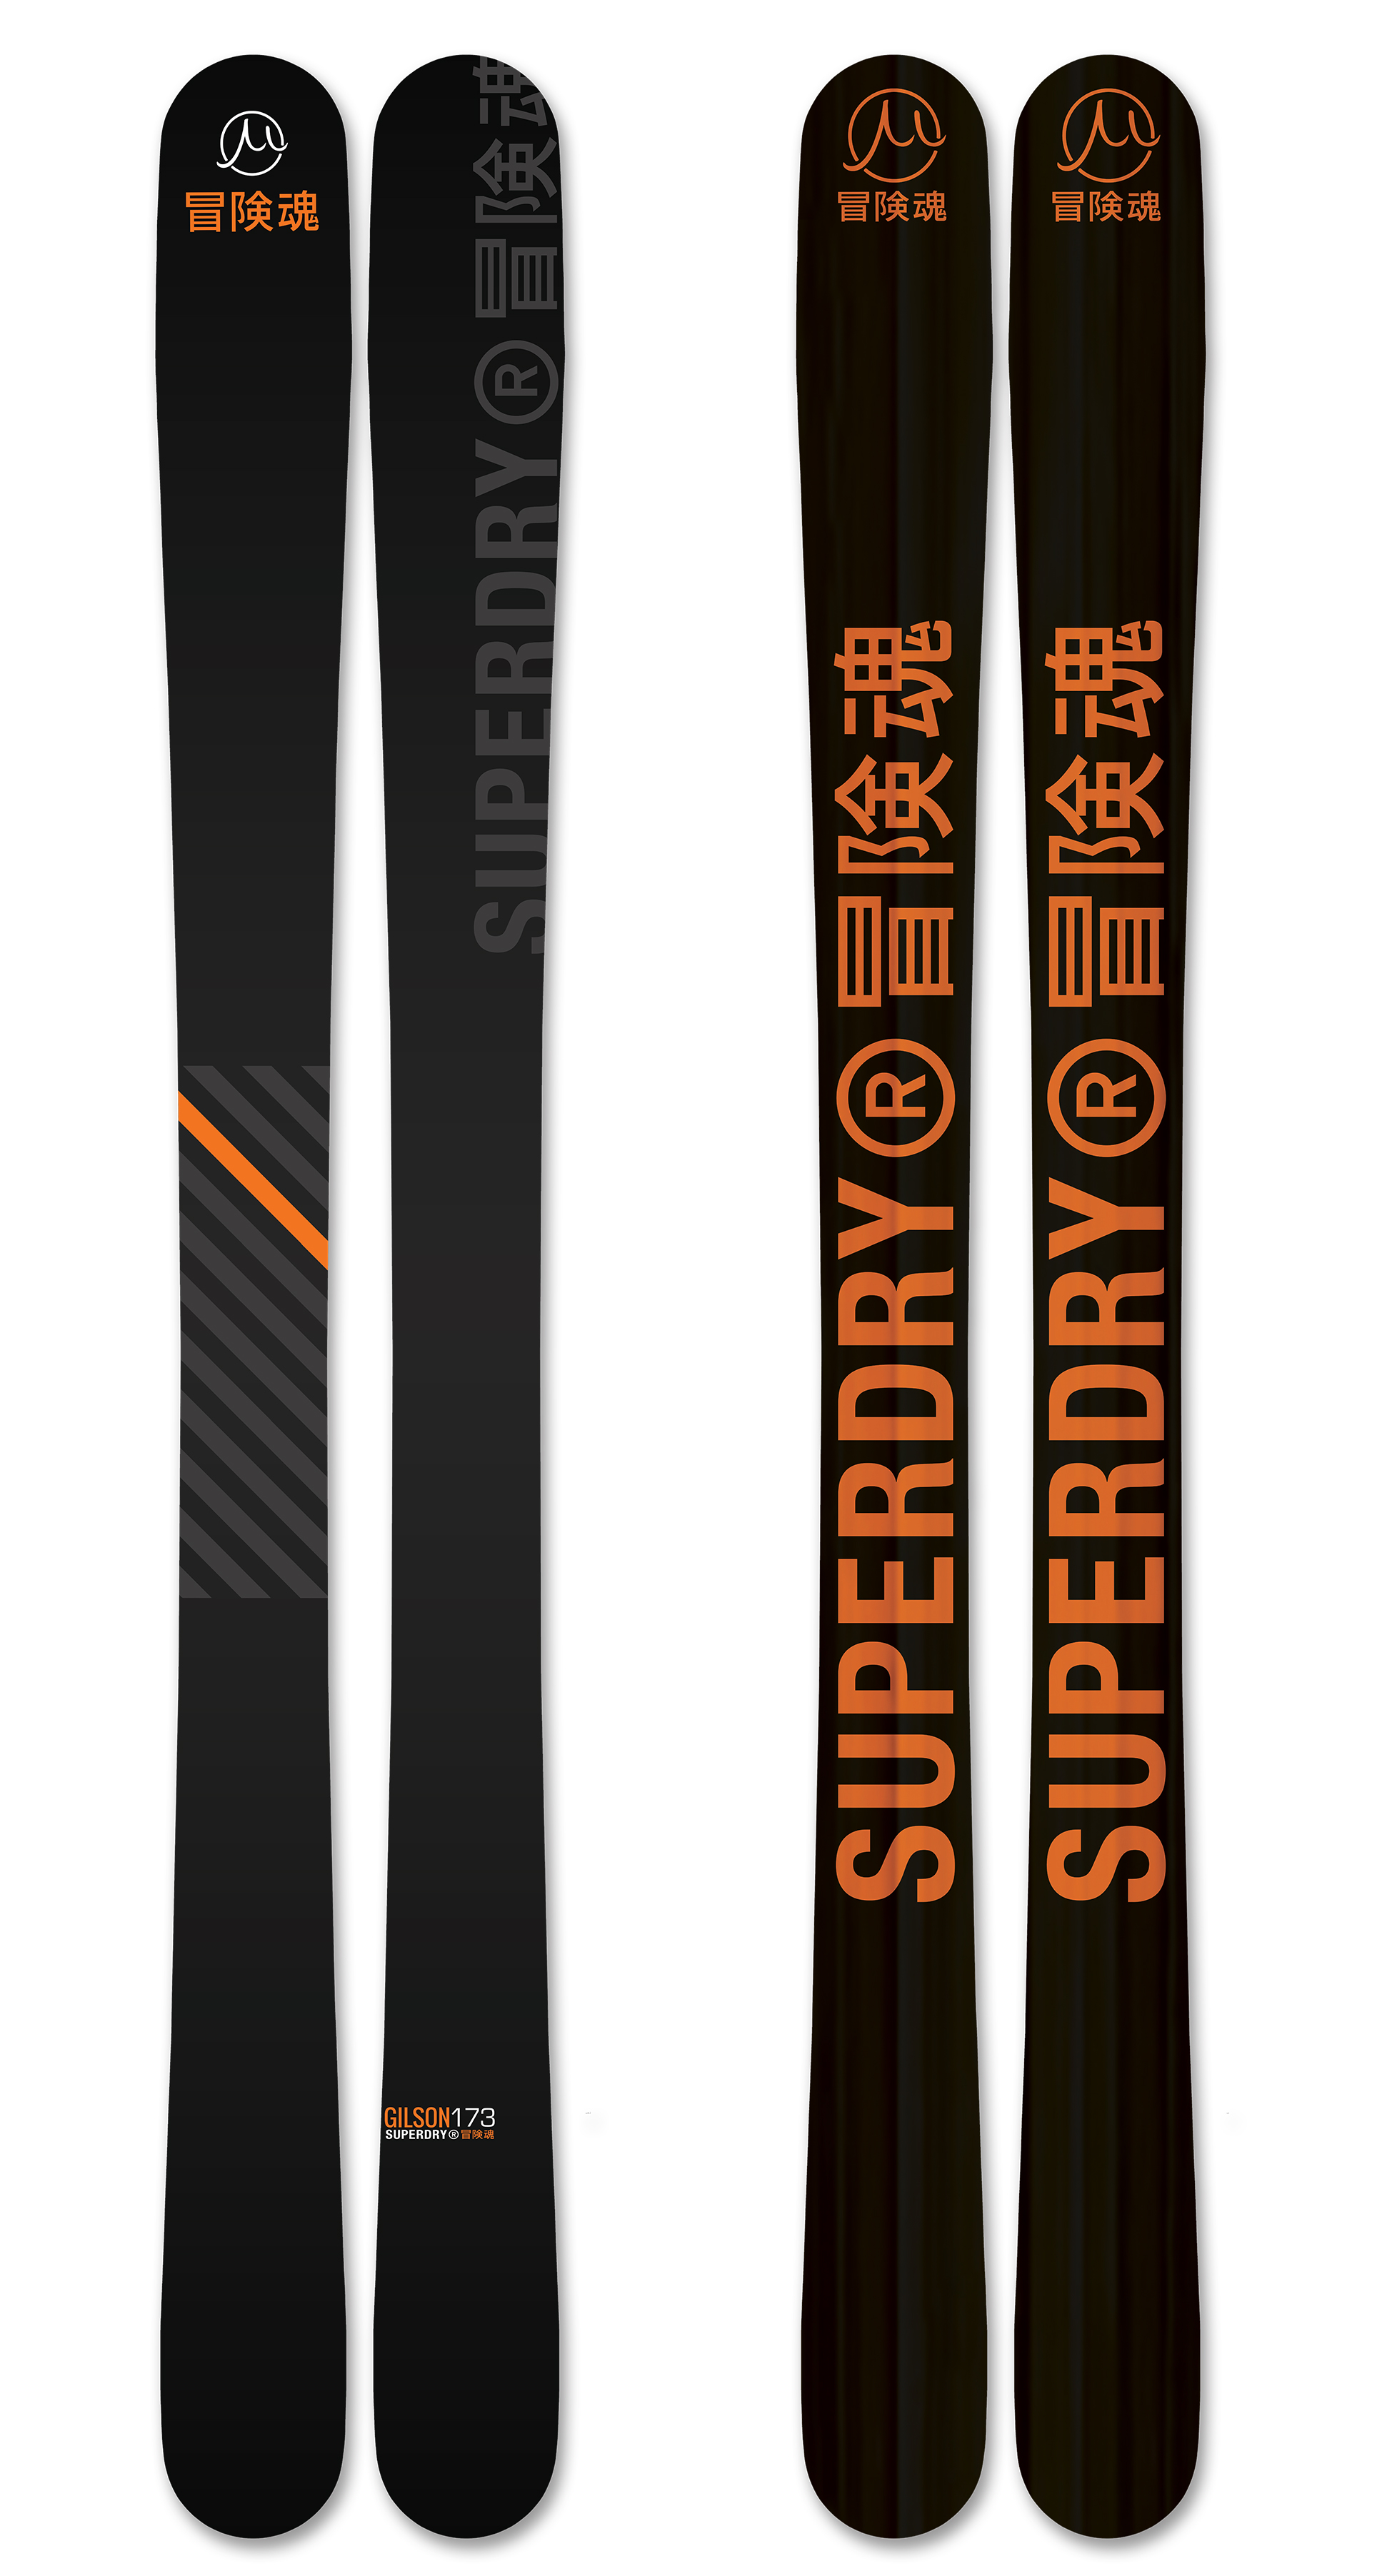 Superdry stealth black orange skis large